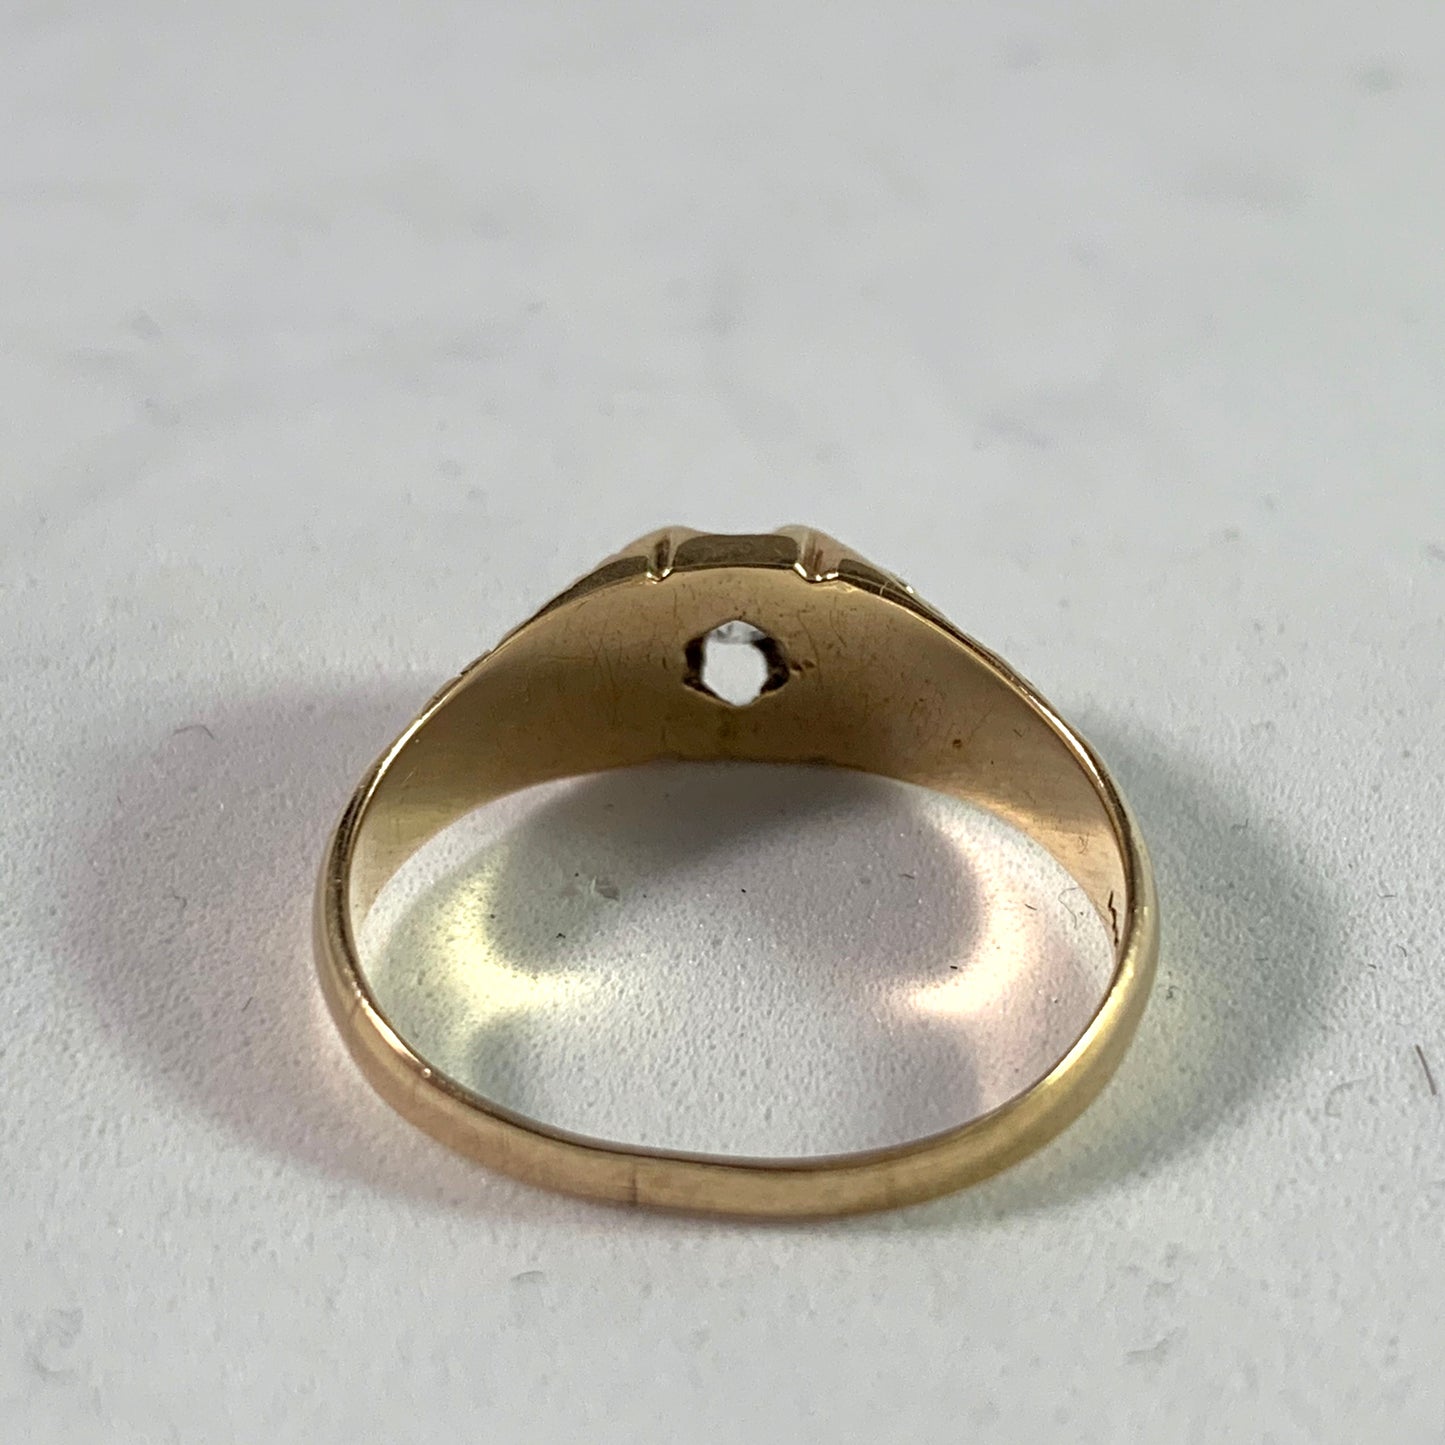 Edwardian 14k Gold 0.10ct Old Cut Diamond Engagement Ring. Maker's Mark